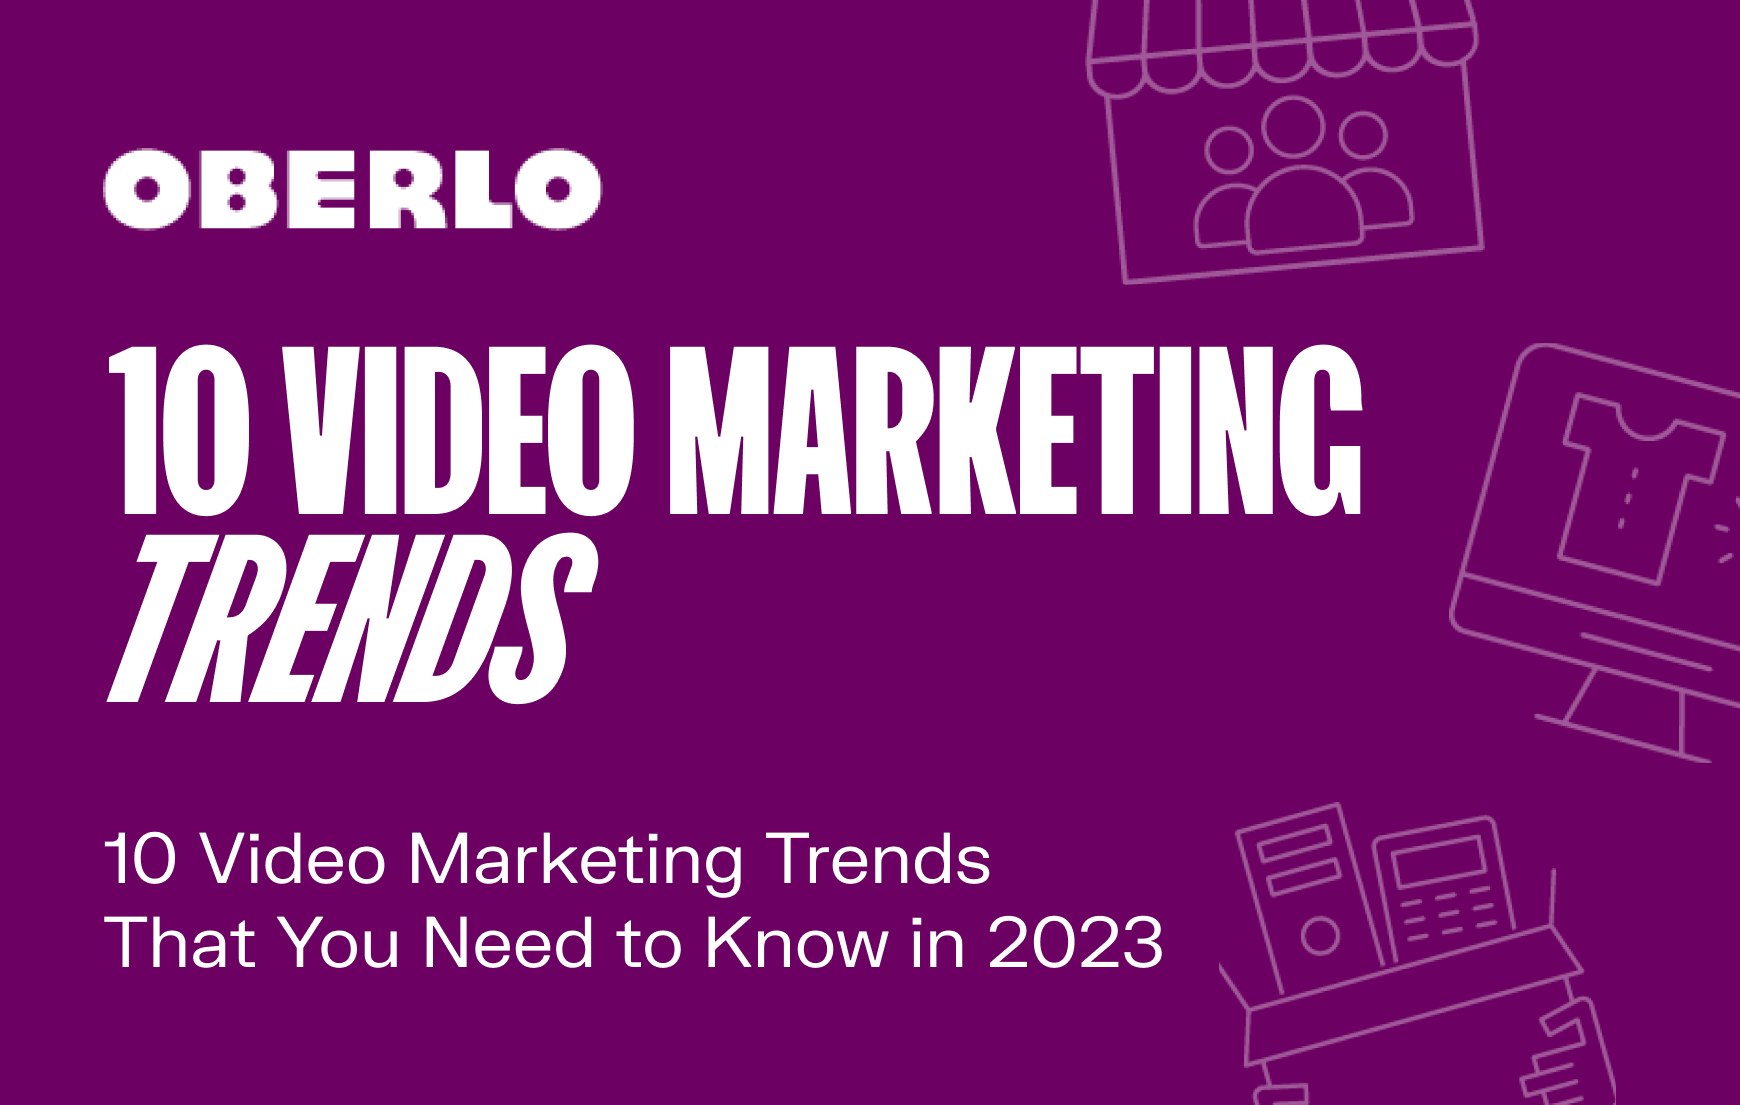 Video marketing trends header graphic